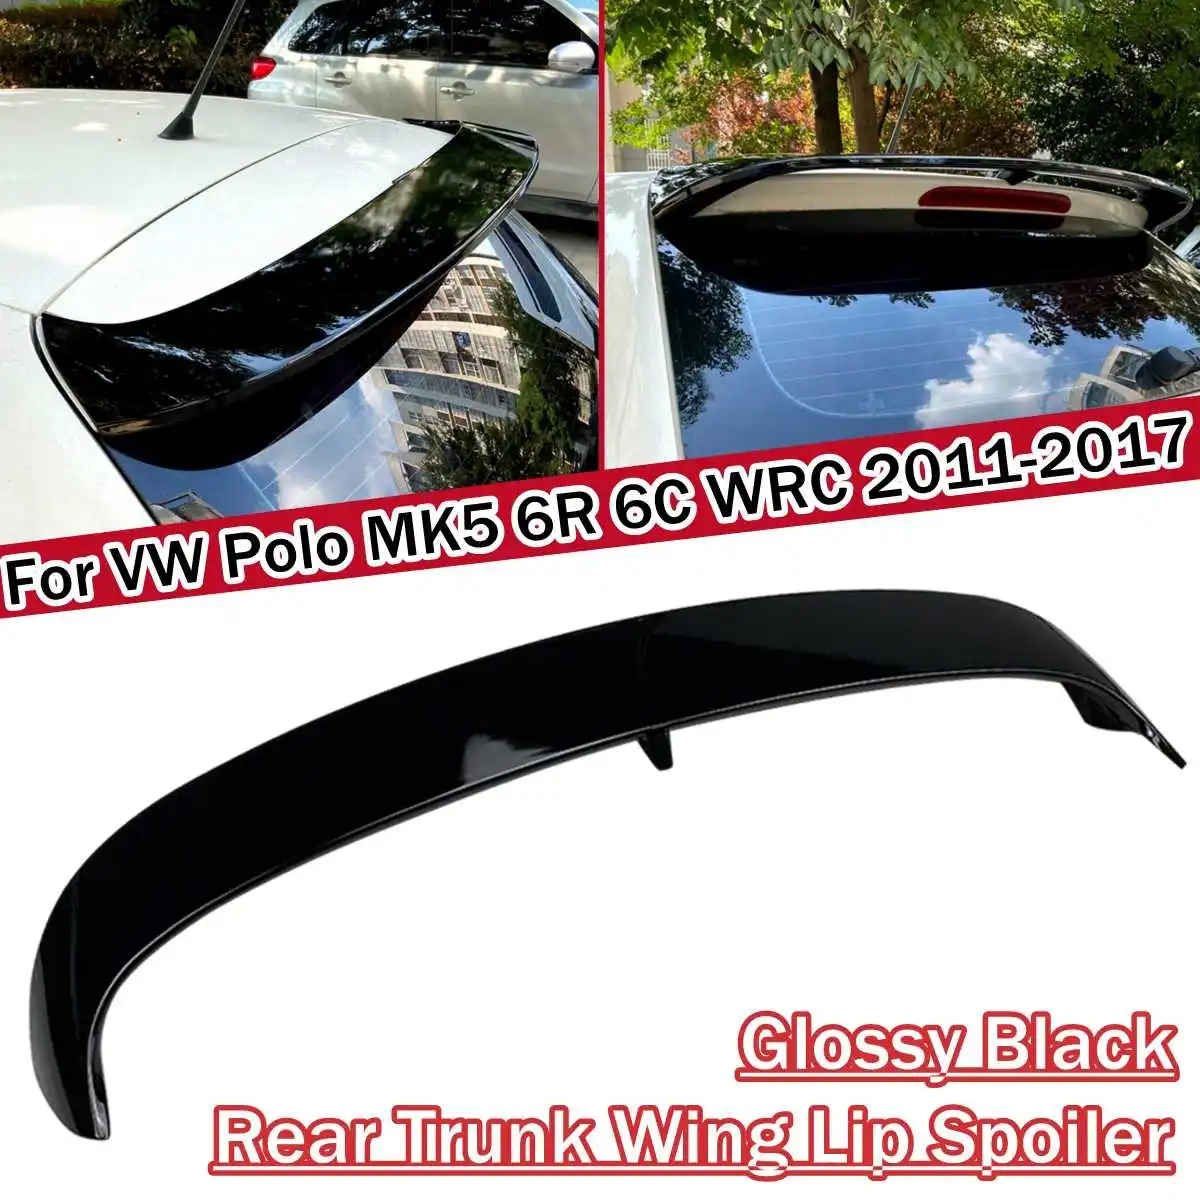 

Car Rear Trunk Wing Lip Spoiler Rear Roof Spoiler Wing Fit For VW Polo MK5 6R 6C WRC 2011 2012 2013 2014 2015-2017 ABS Plastic